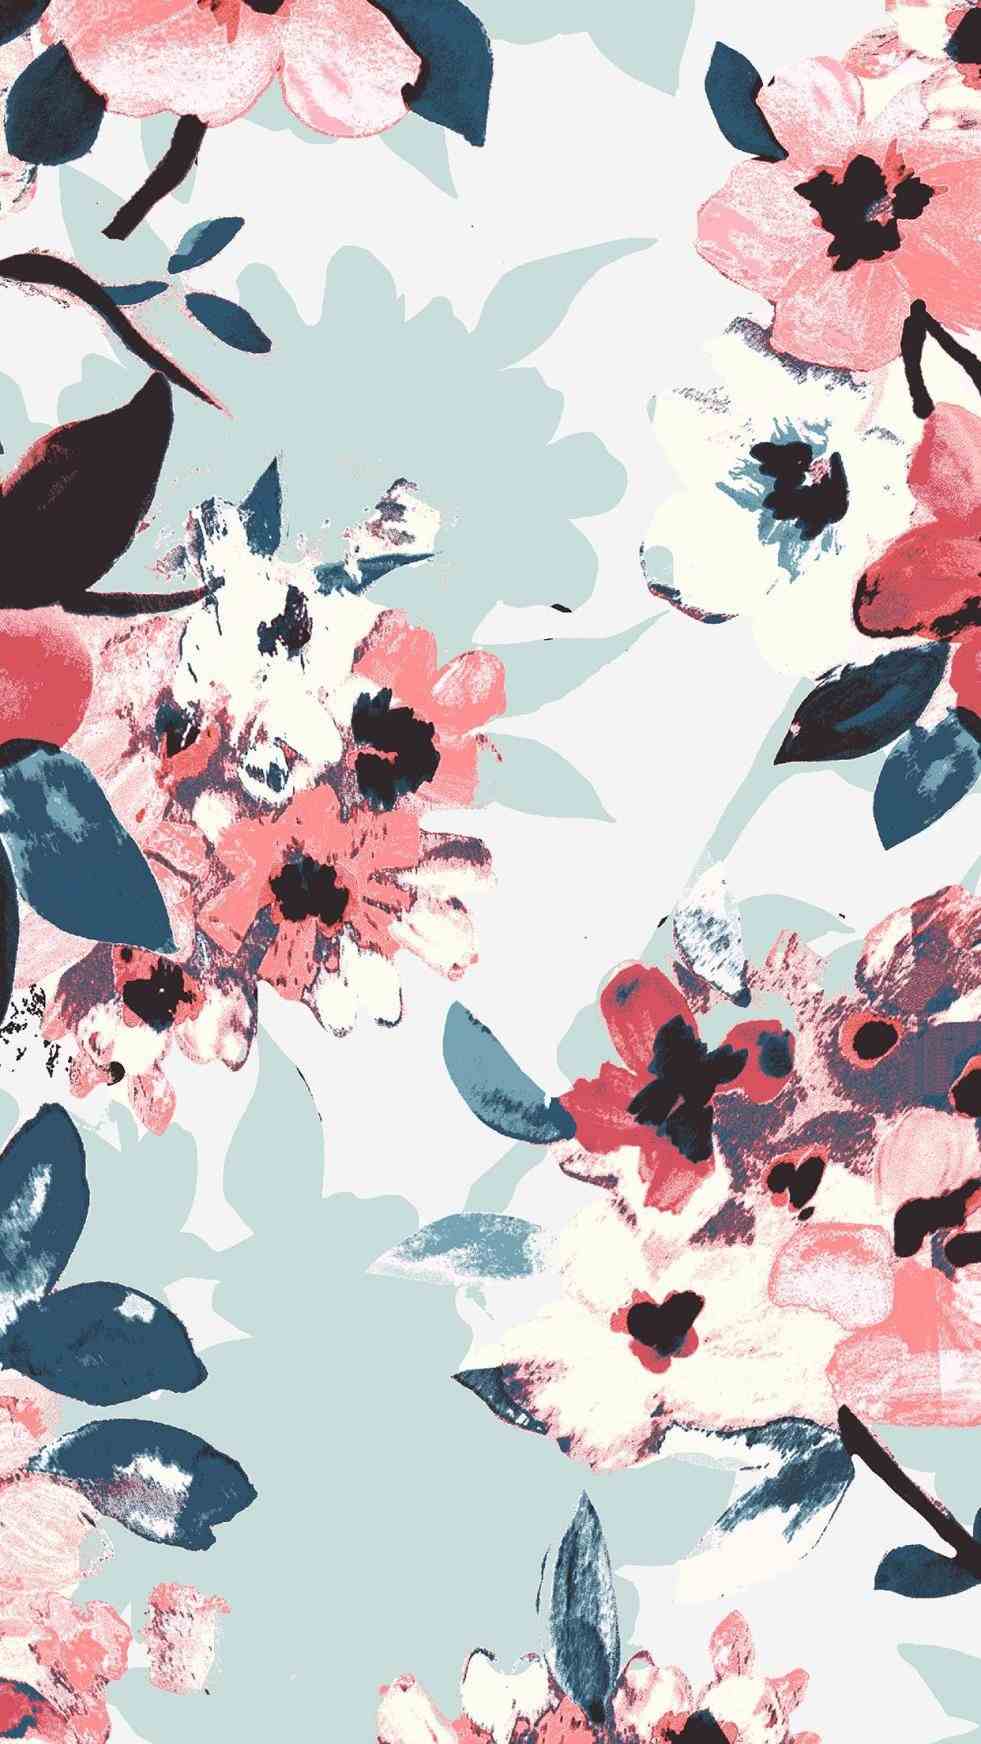 Watercolor Flower iPhone Wallpapers - Top Free Watercolor Flower iPhone ...